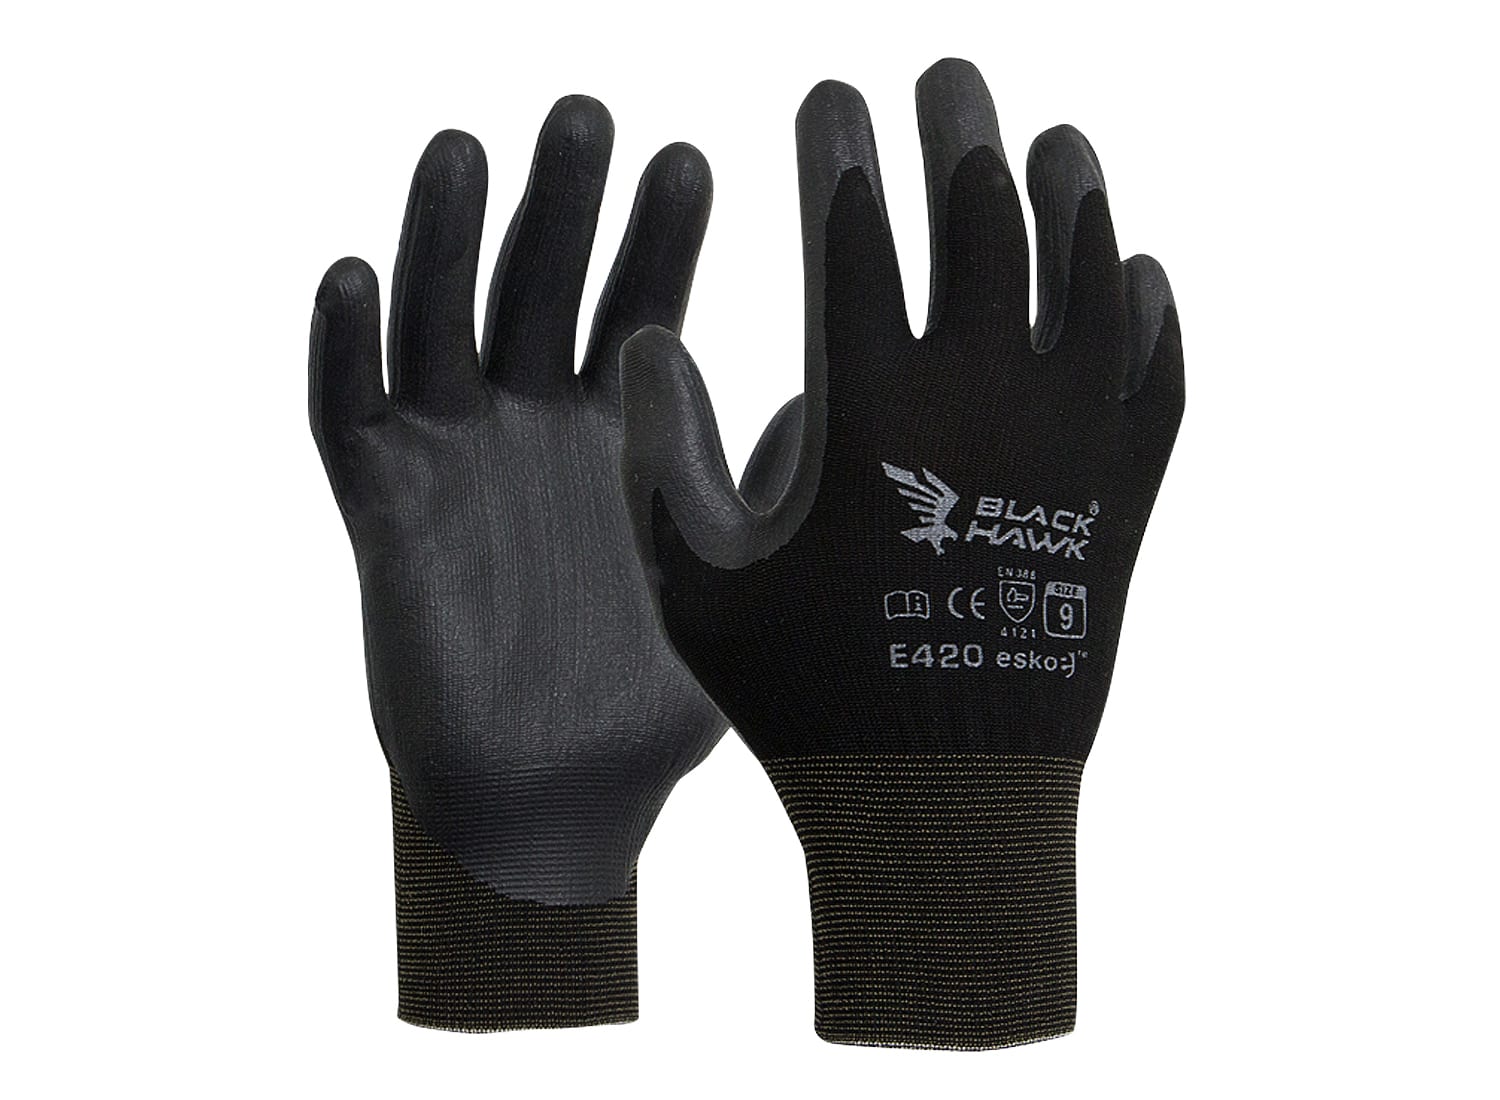 BLACK HAWK Glove, Black polyamide with black foam nitrile coating Size 9(L) E420